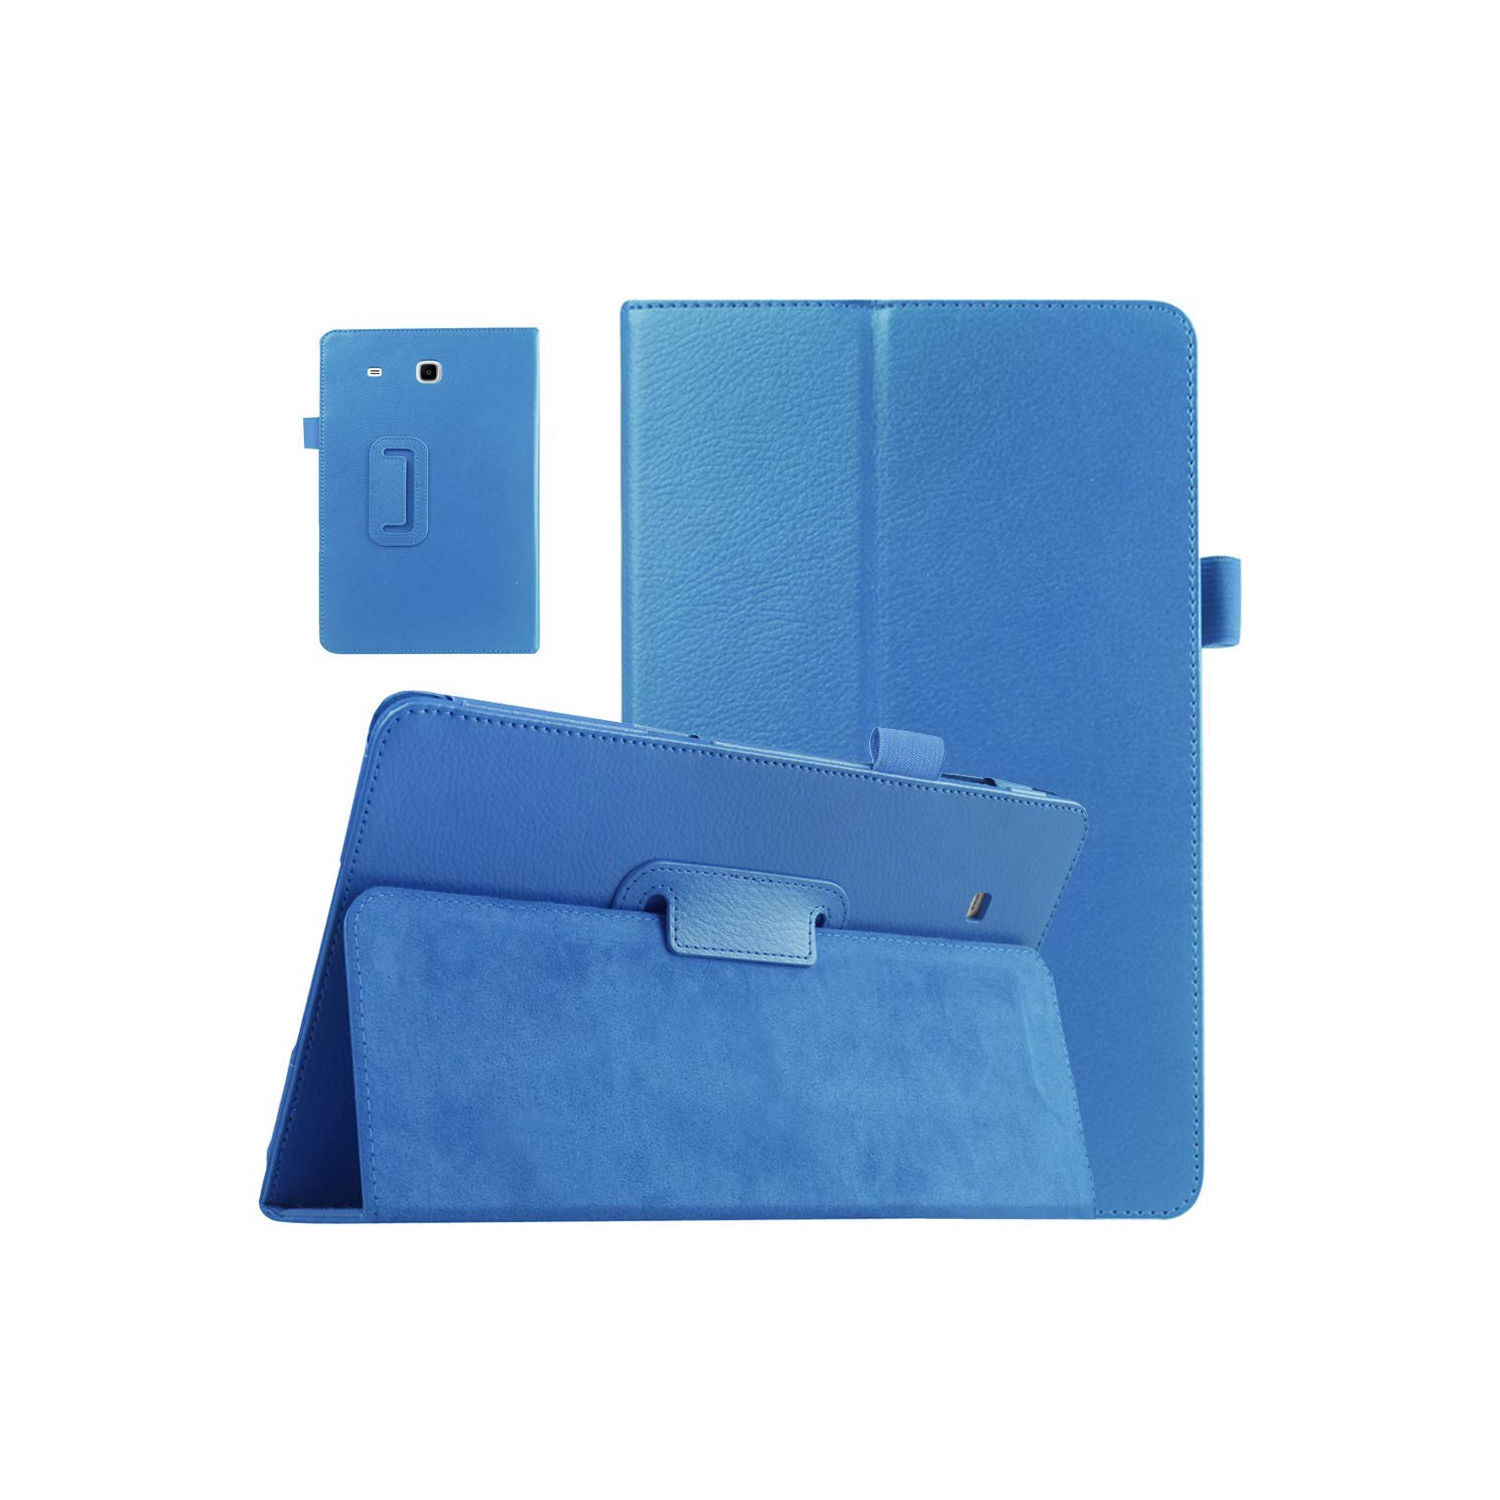 EKVINOR Case for Tab E 9.6 Case Model T560, Slim Leather Folio Stand Case for Samsung Galaxy Tab E 9.6 Inch 2015 Released Ta